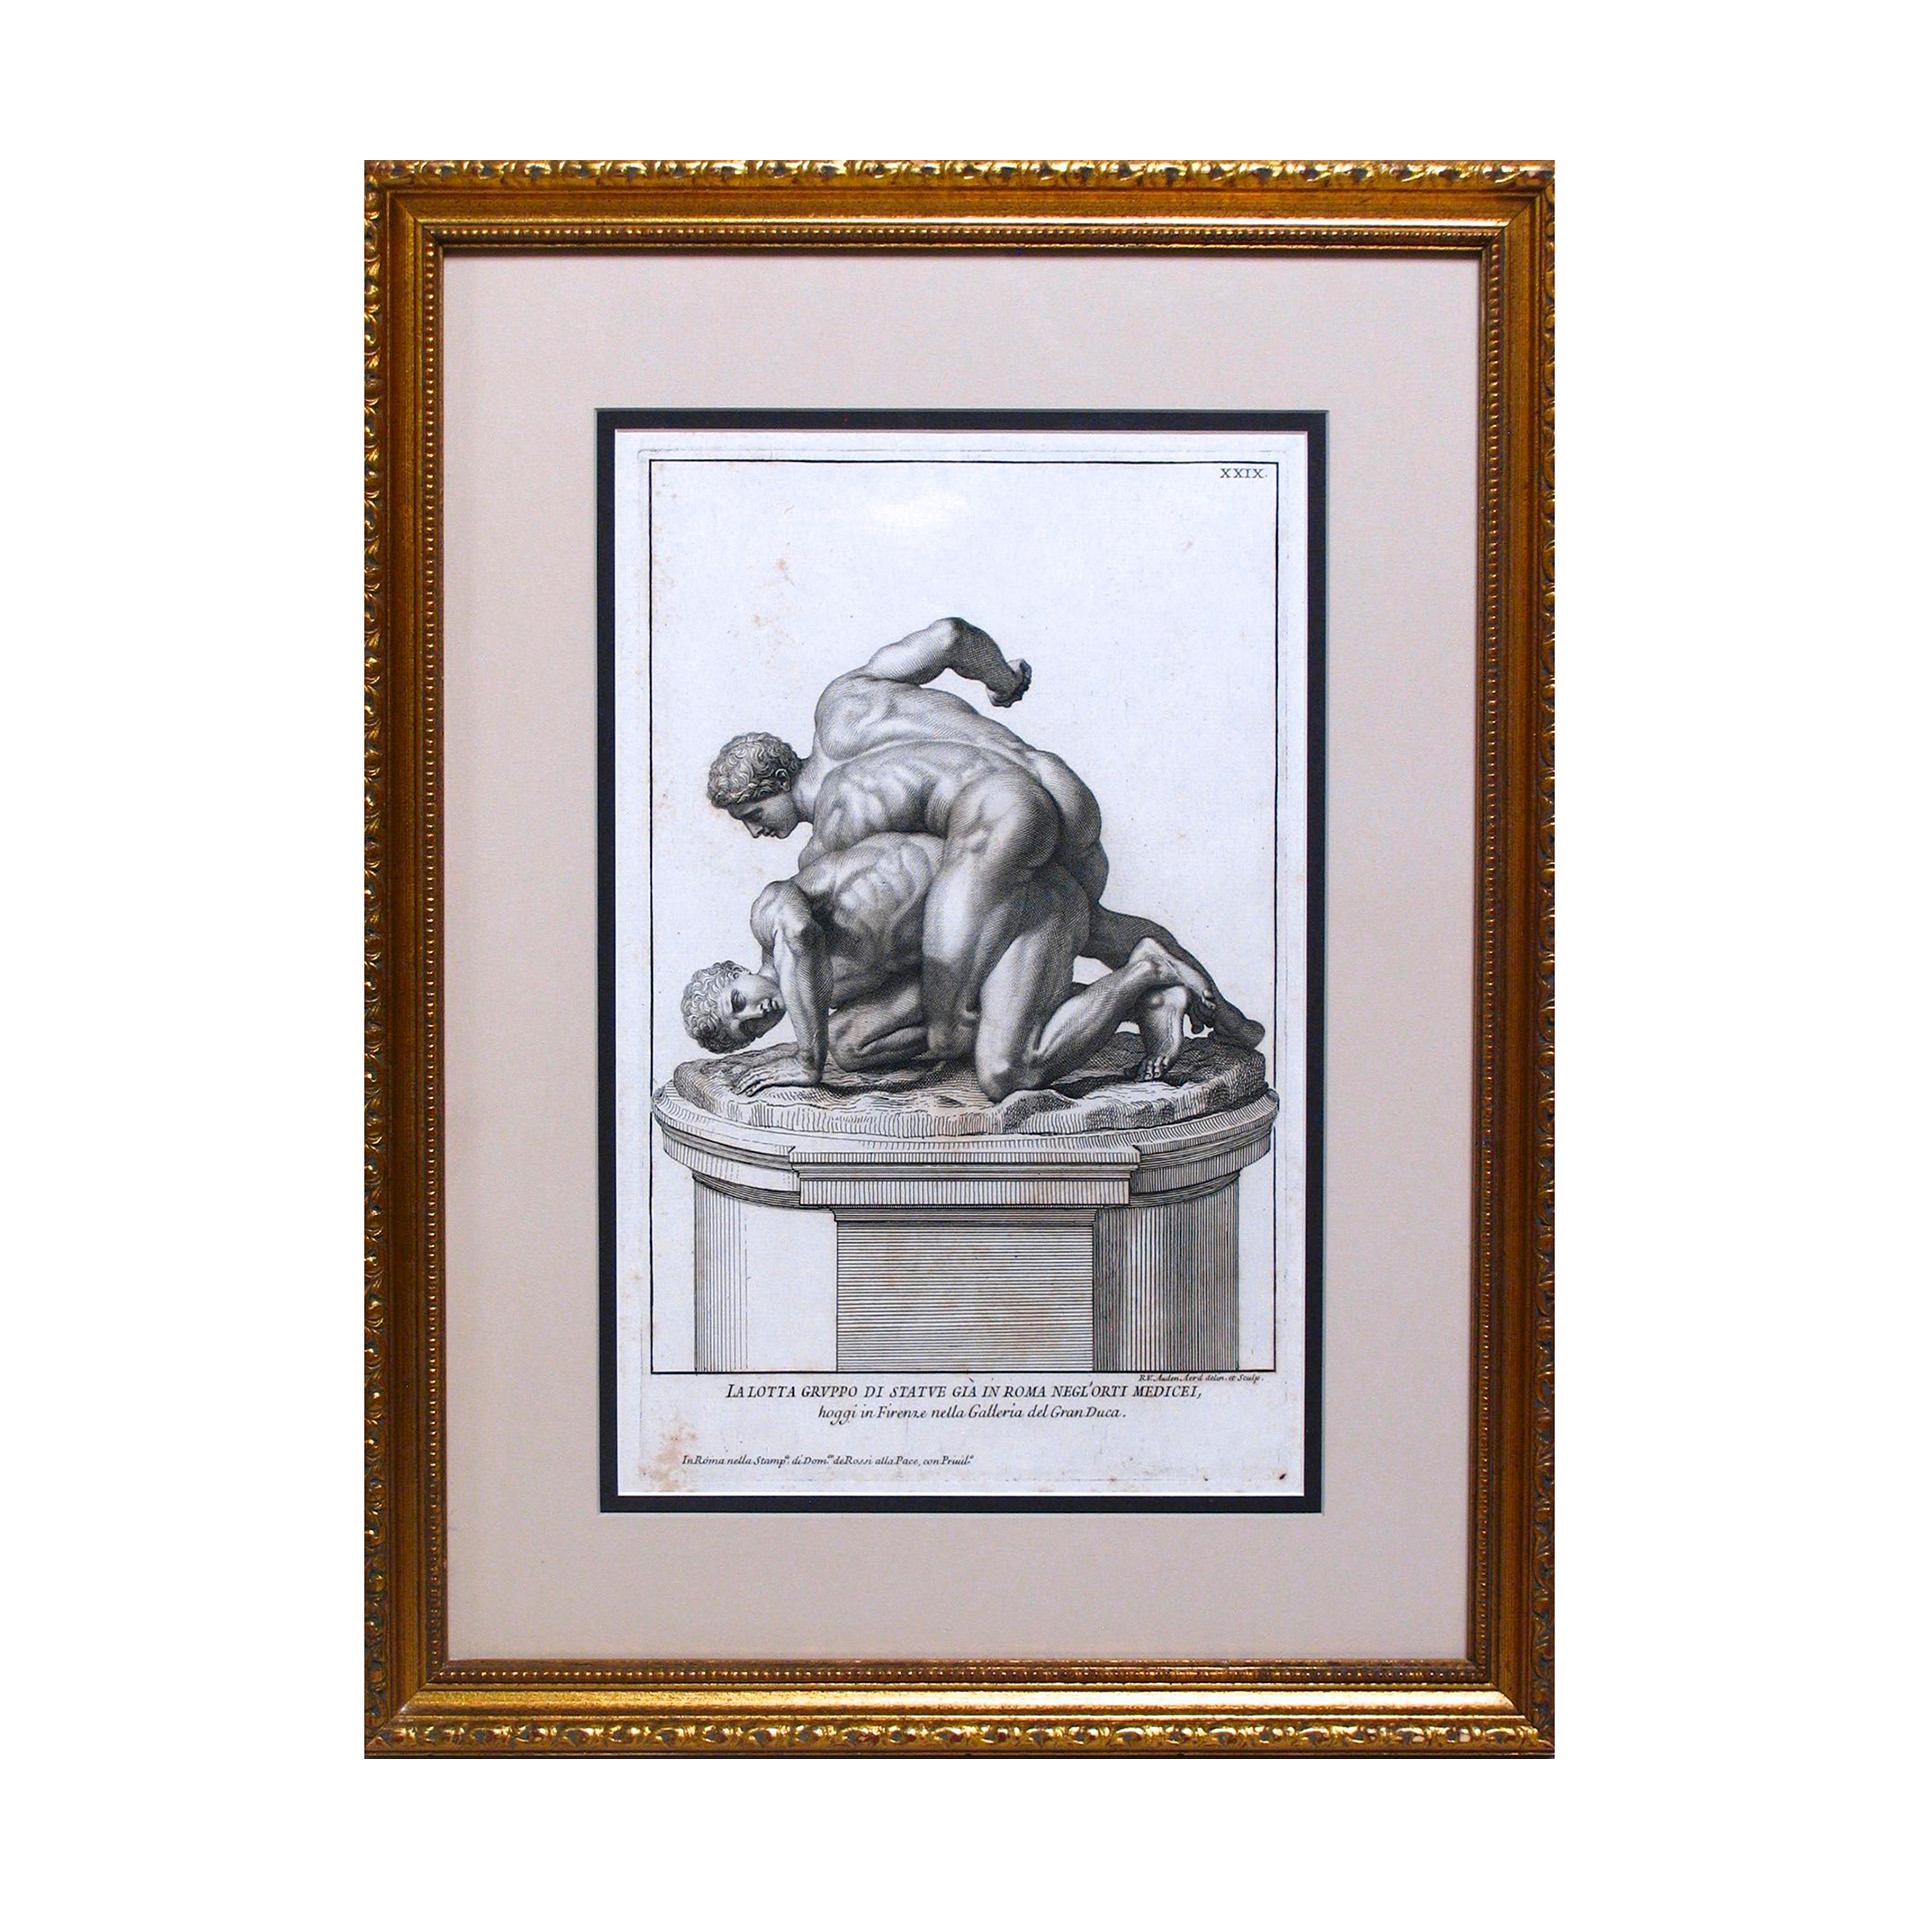 Italian Print Illustration of Two Men Wrestling, Copper Plate Engraving For Sale